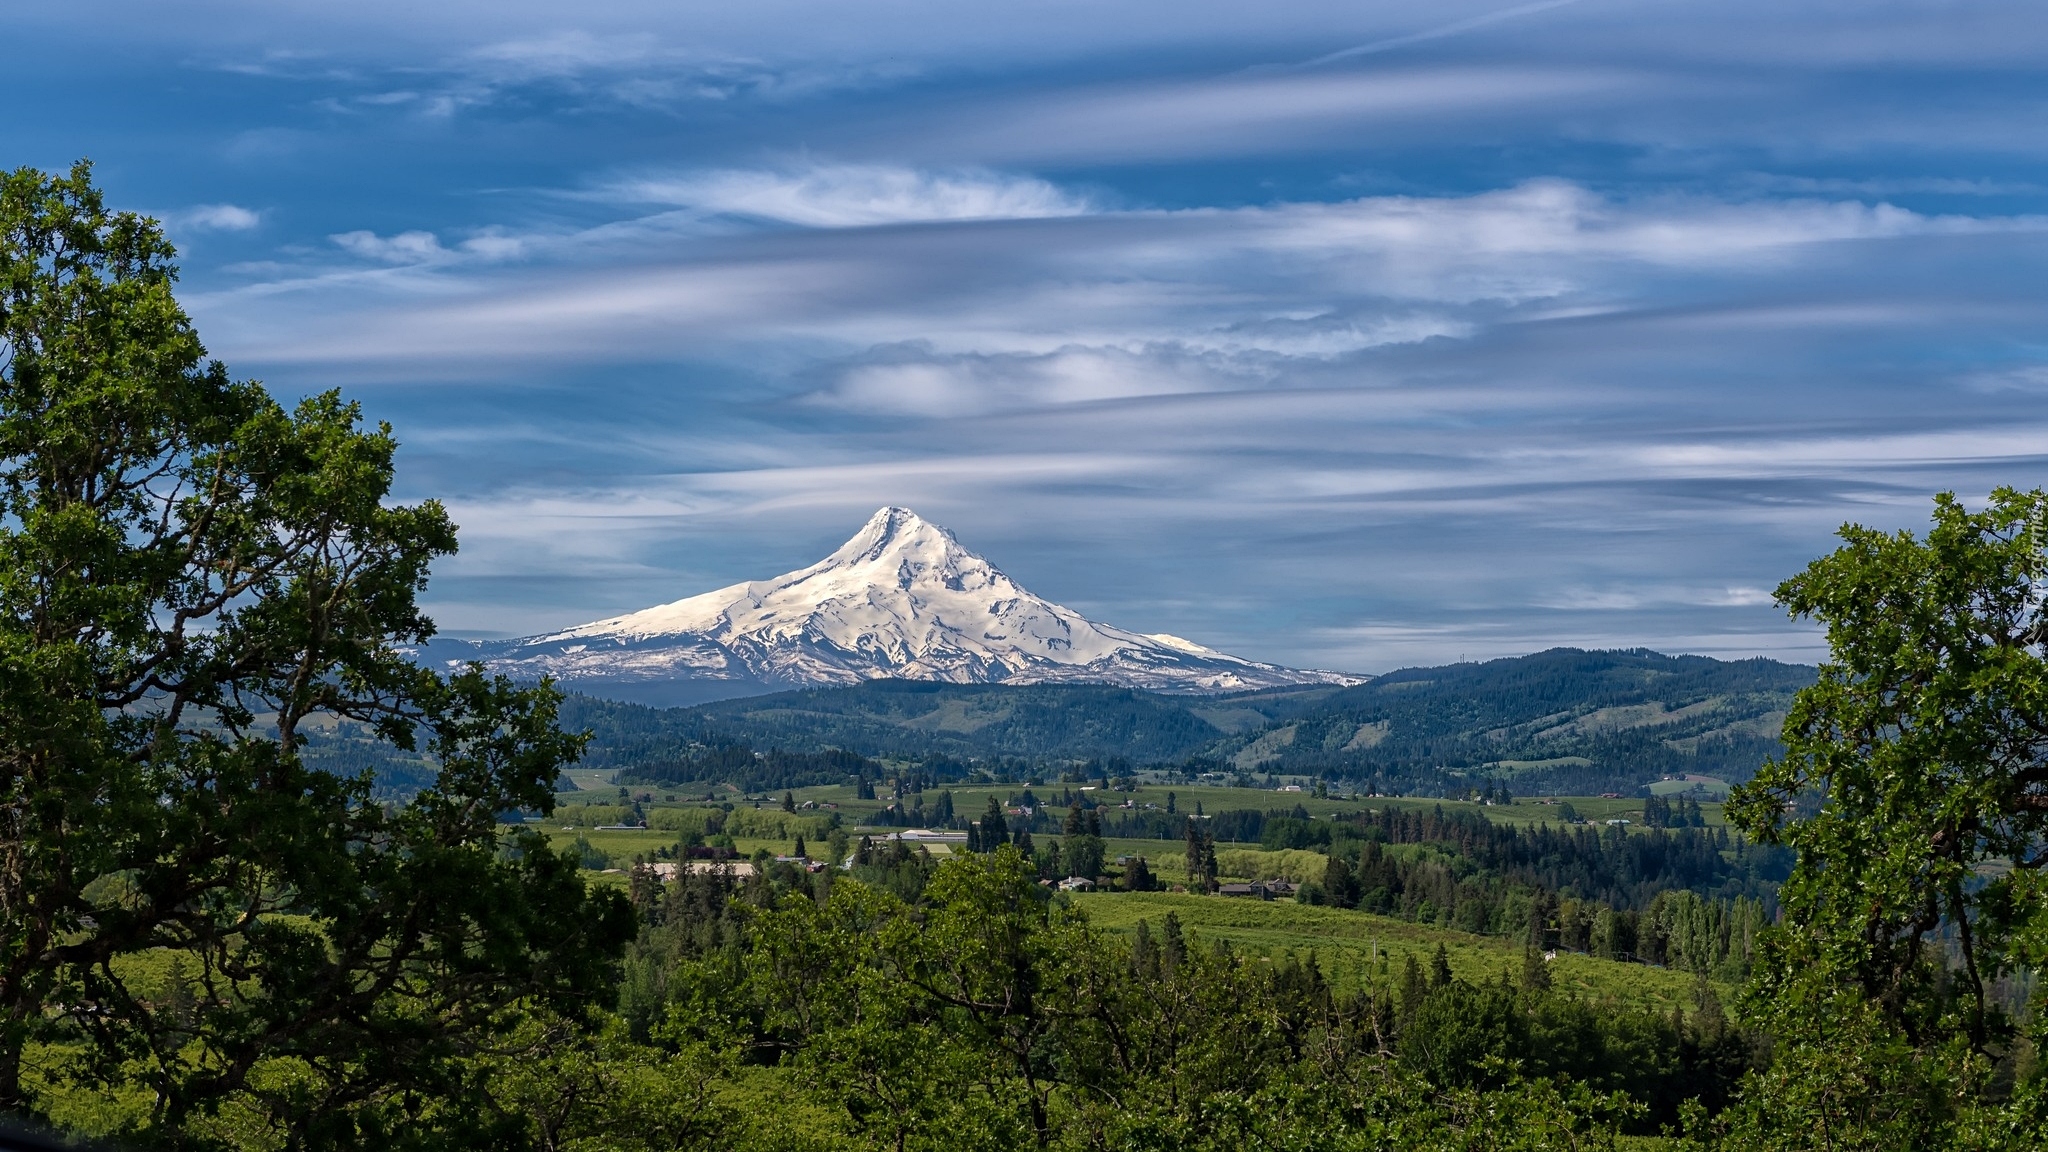 Stany Zjednoczone, Stan Oregon, Góra, Stratowulkan, Mount Hood, Drzewa